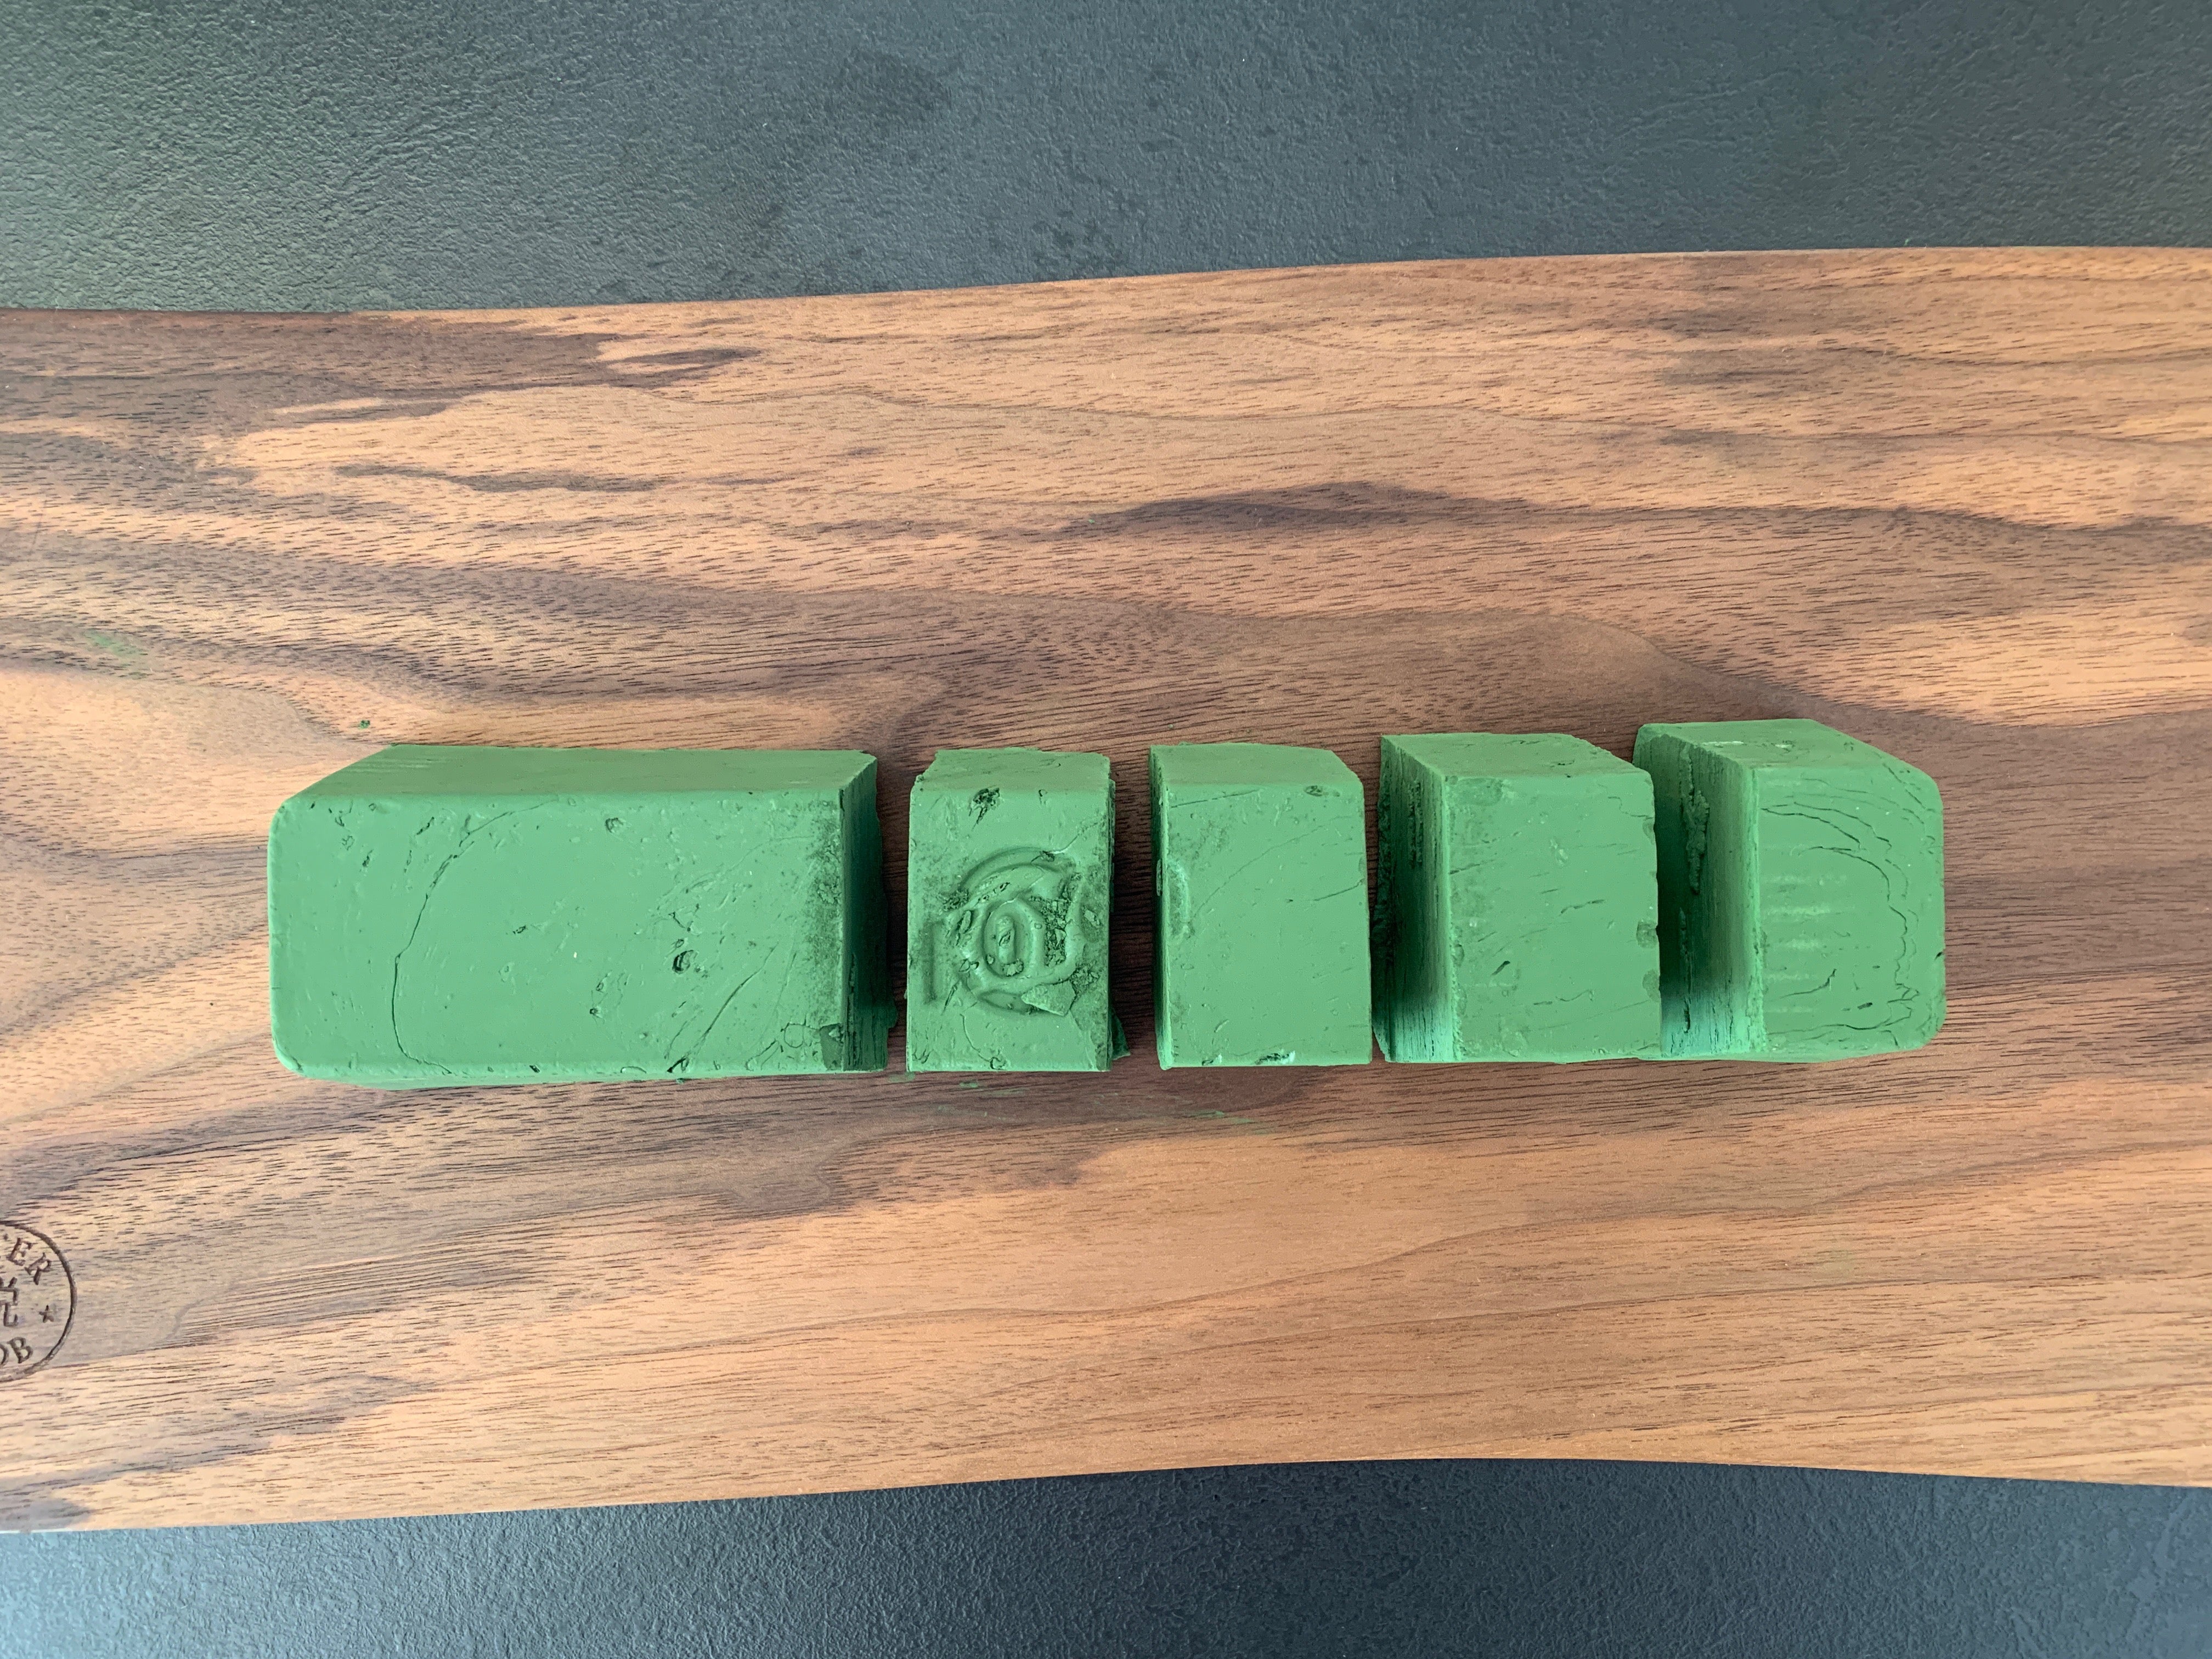 Koyo Green Rouge Polishing Compound [smaller chunk] – SharpEdge